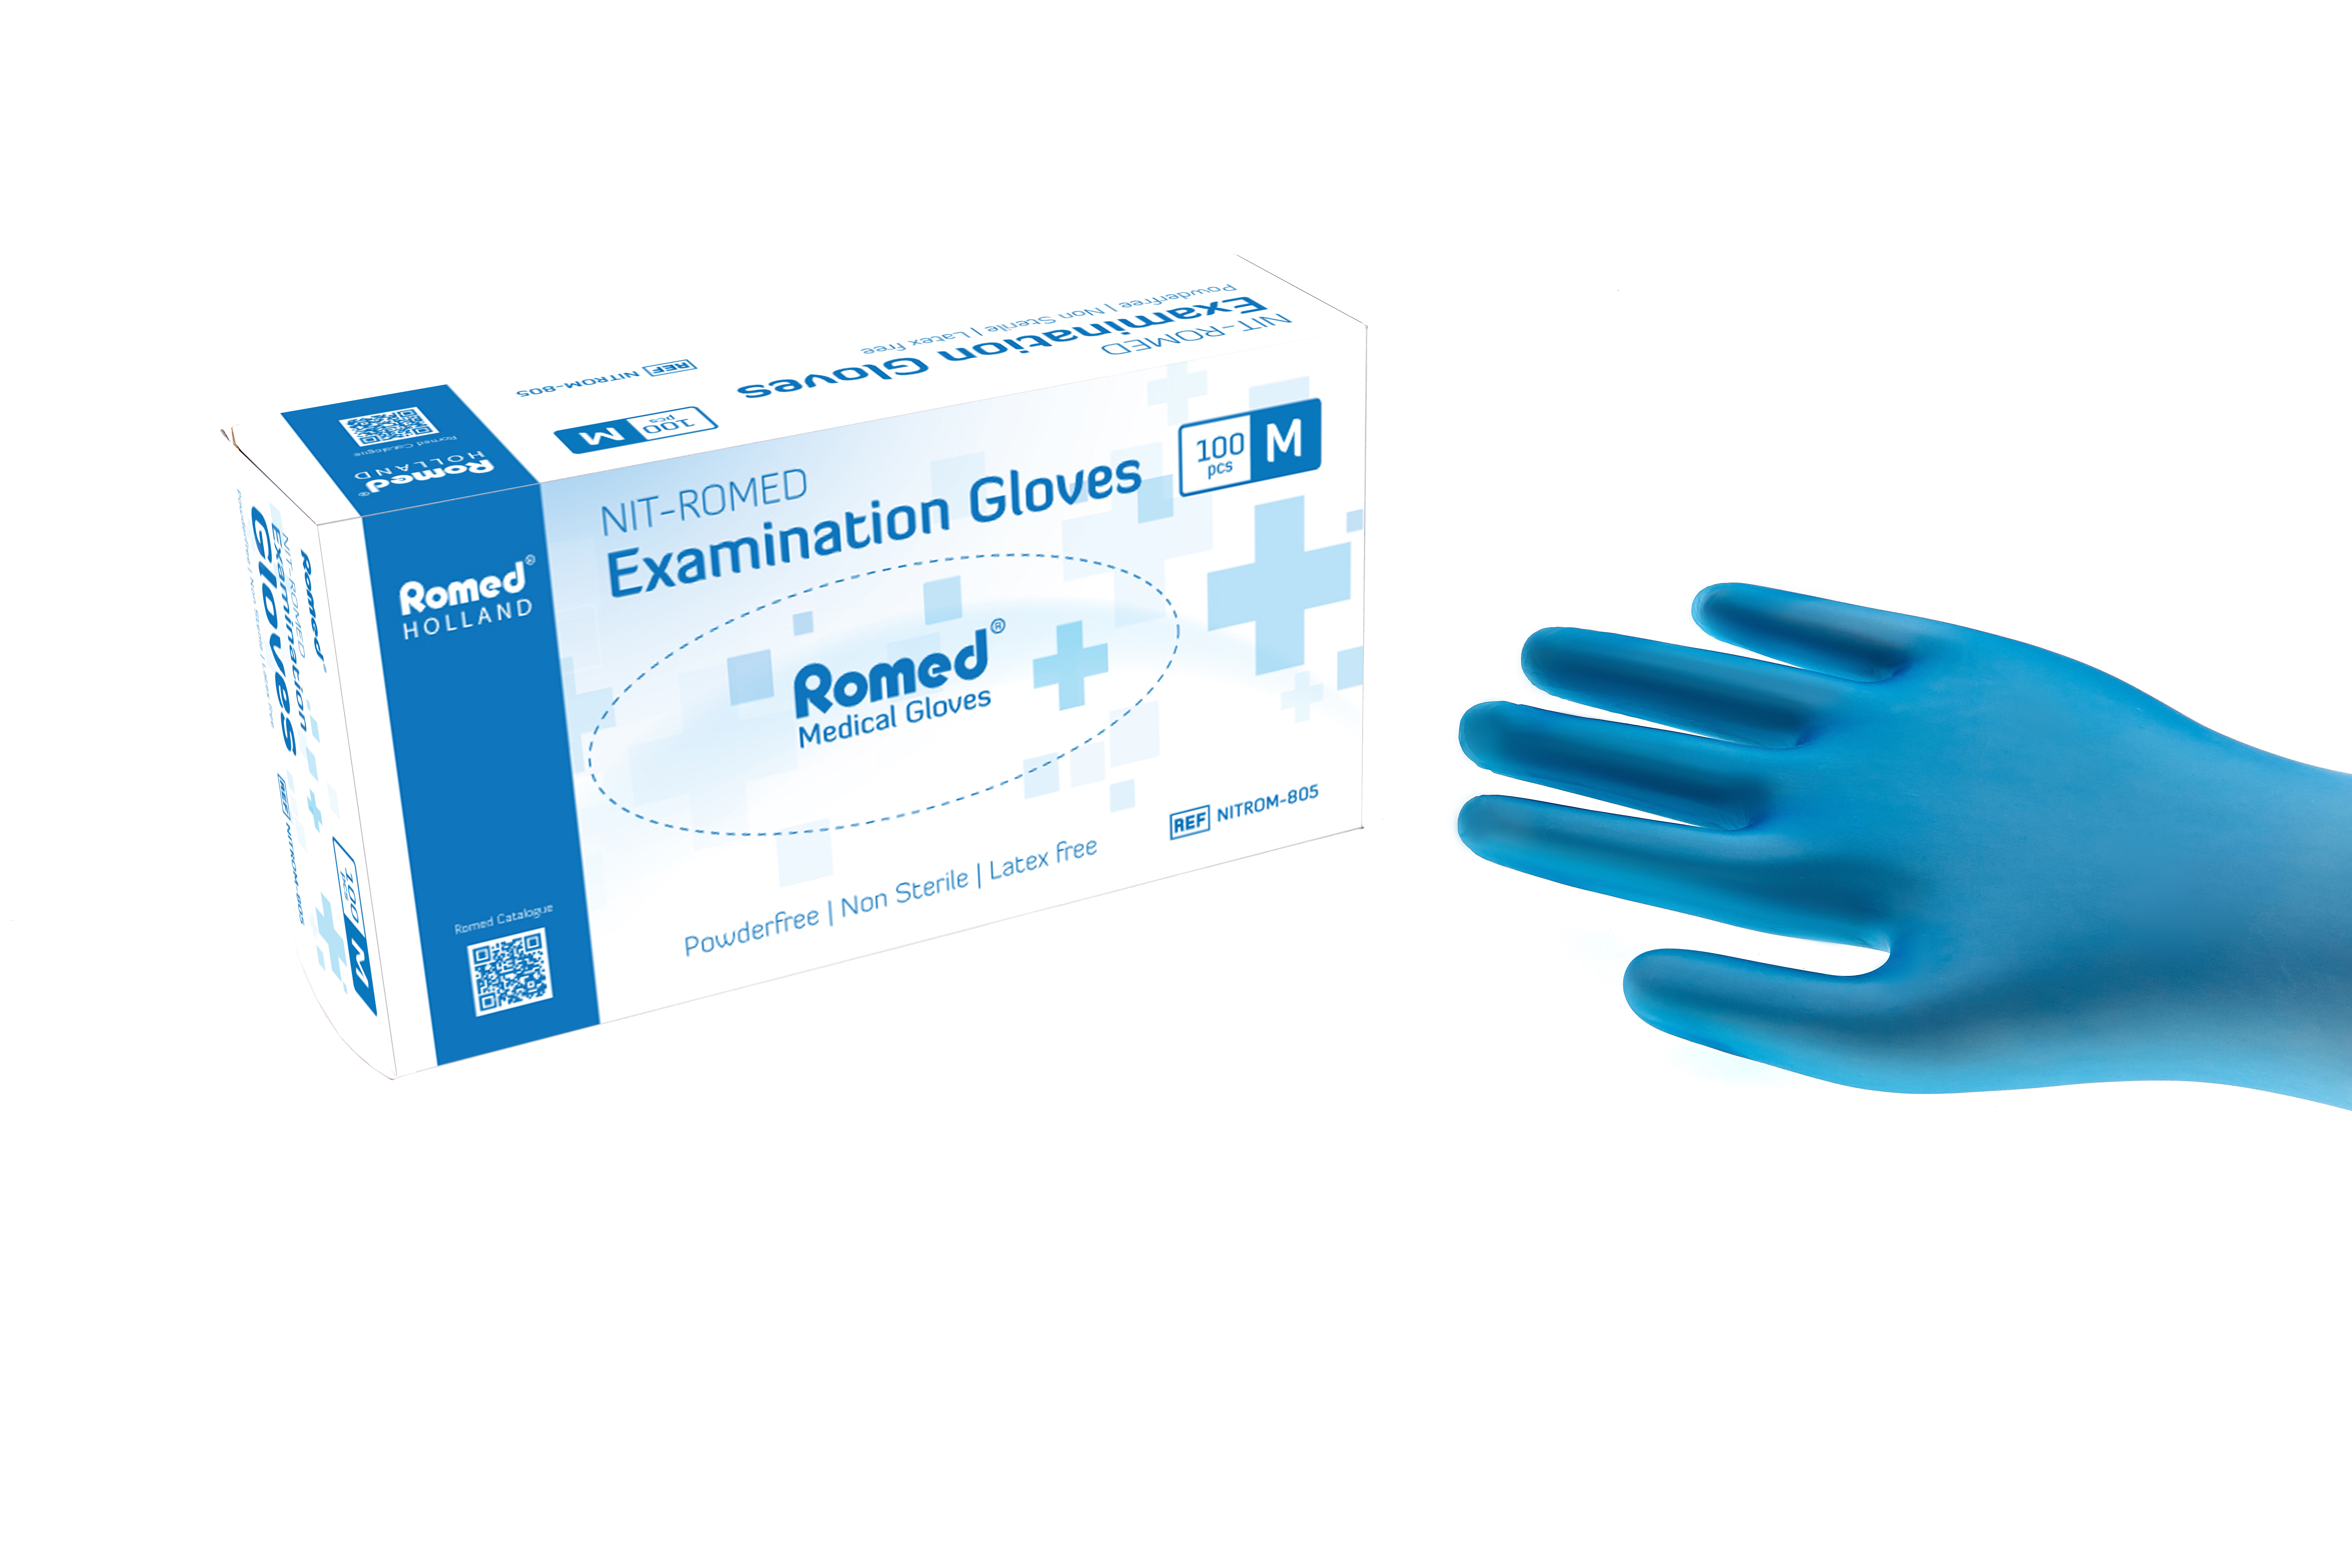 NITROM-800 Nit-Romed gants d’examen médical, bleu, non poudrés, small, 10 x 100 unités = 1000 unités. por paquete.